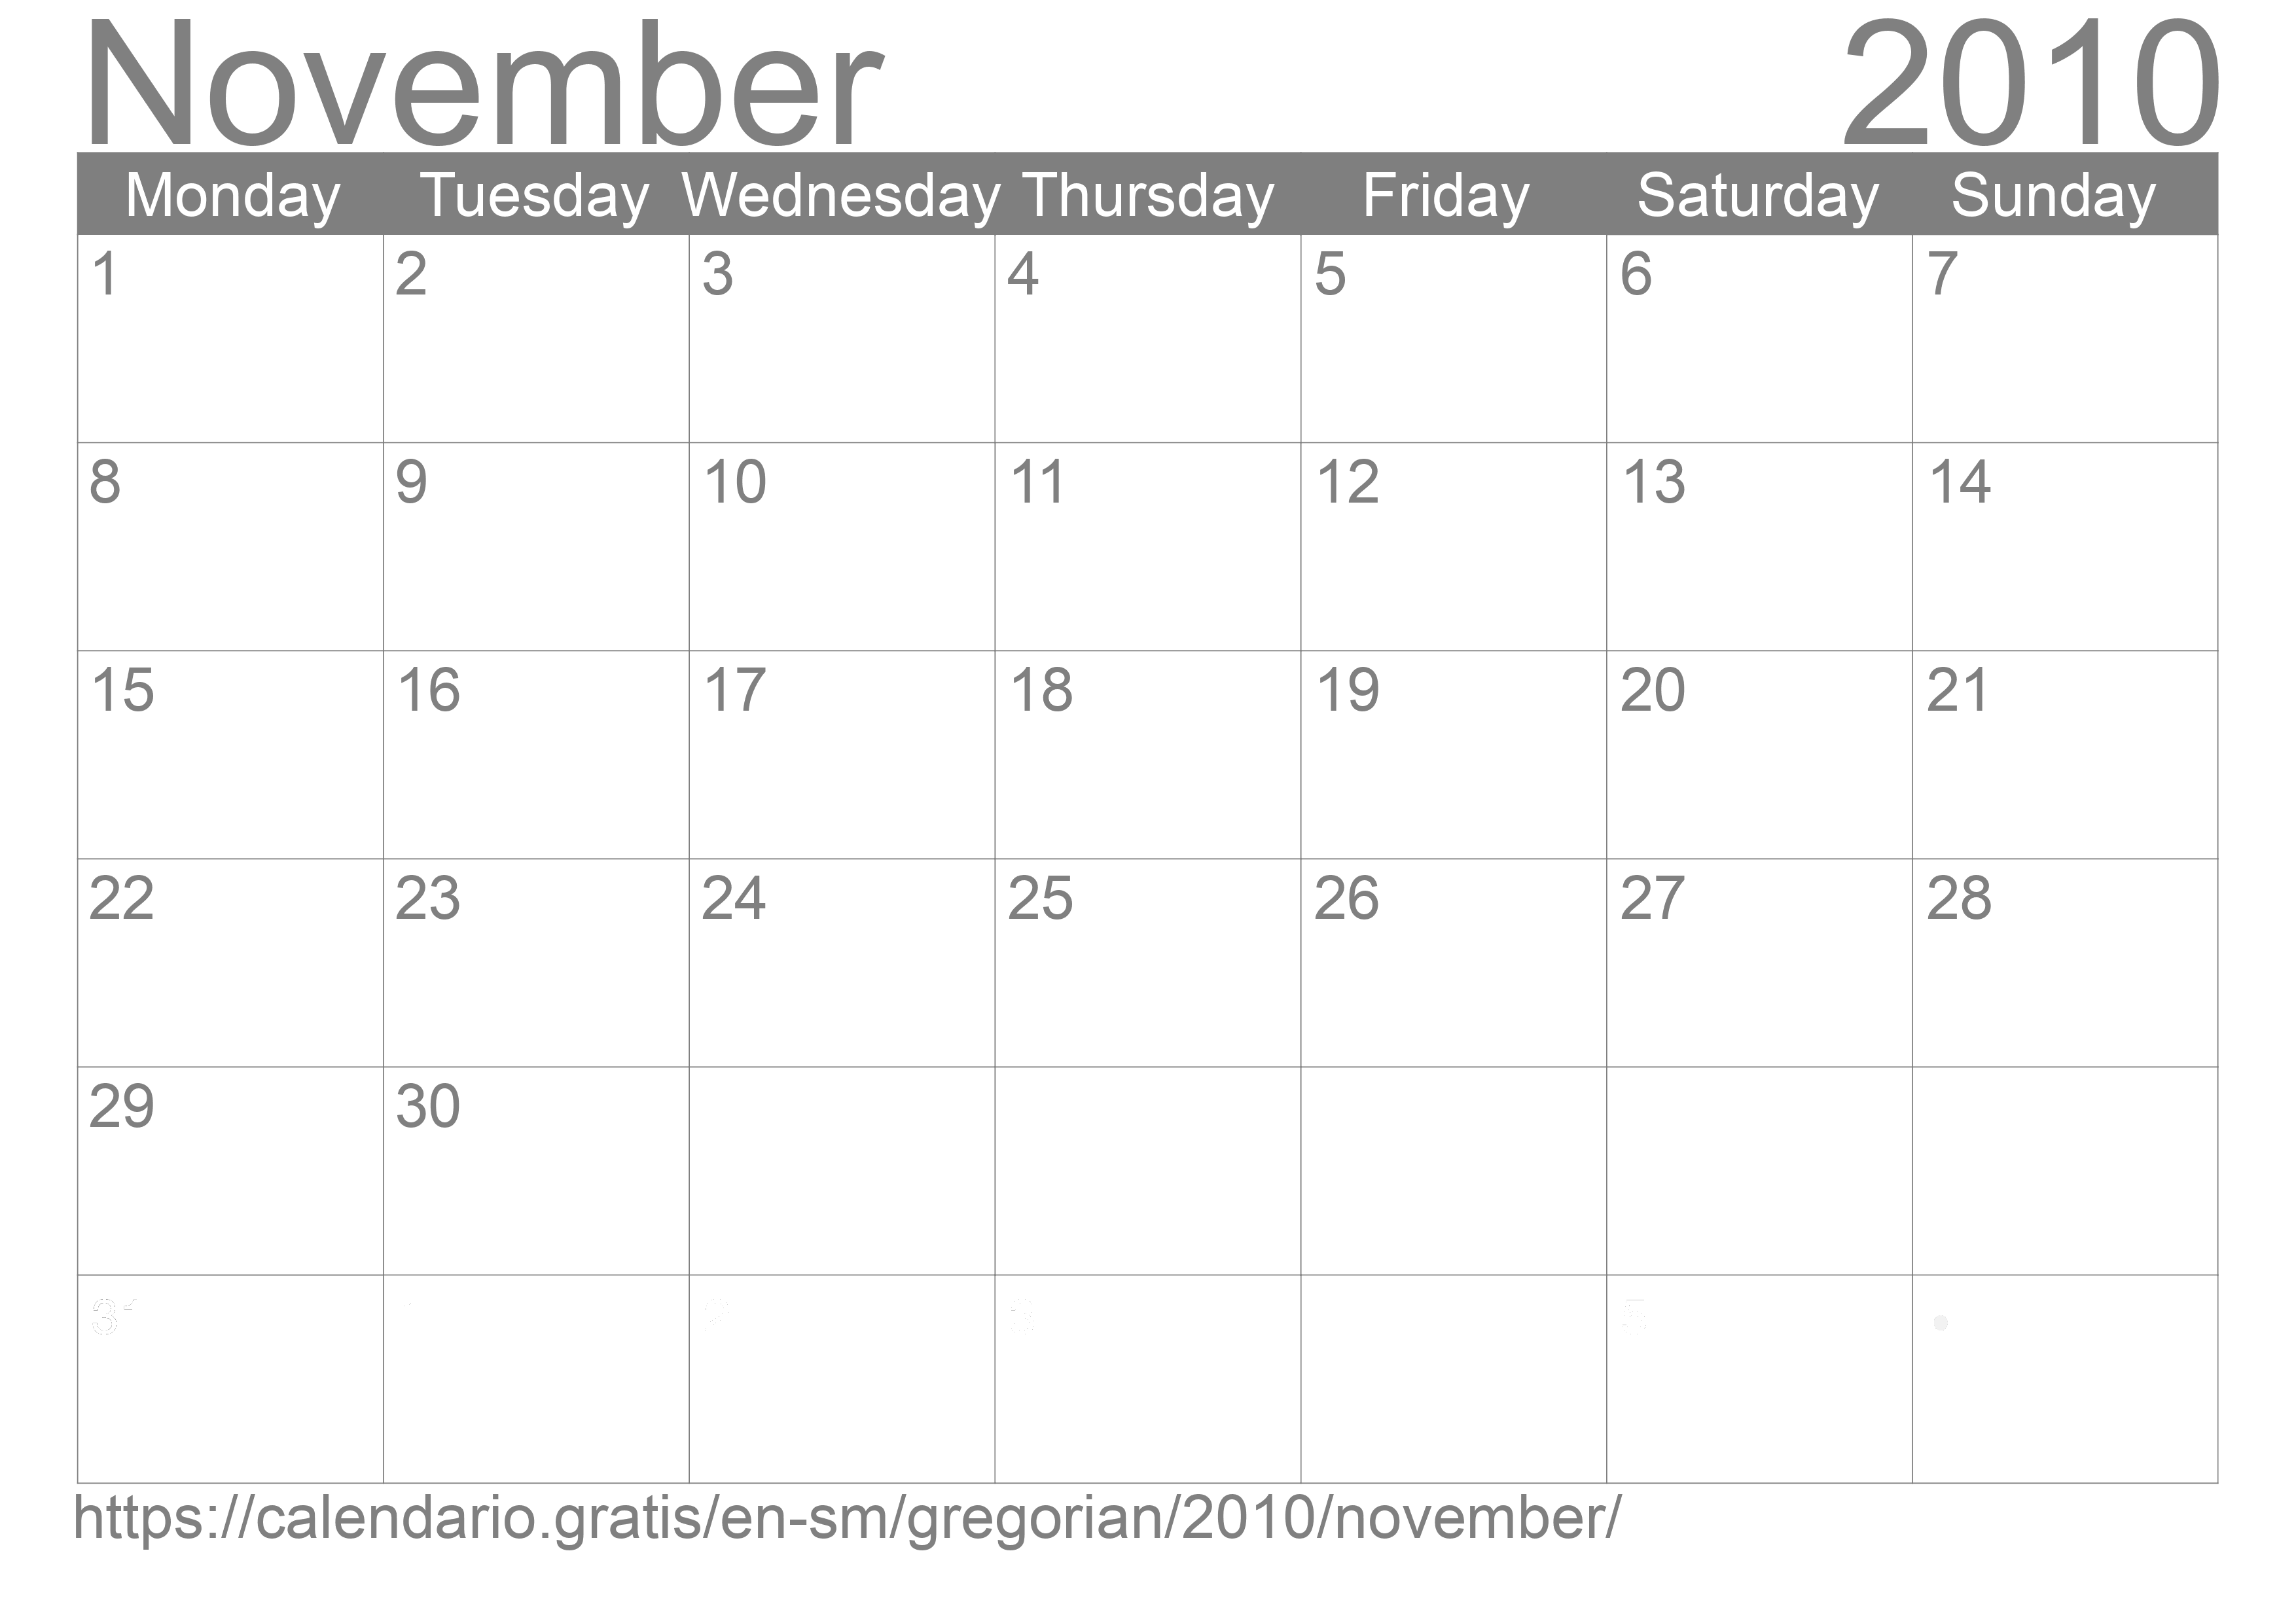 Calendar November 2010 to print